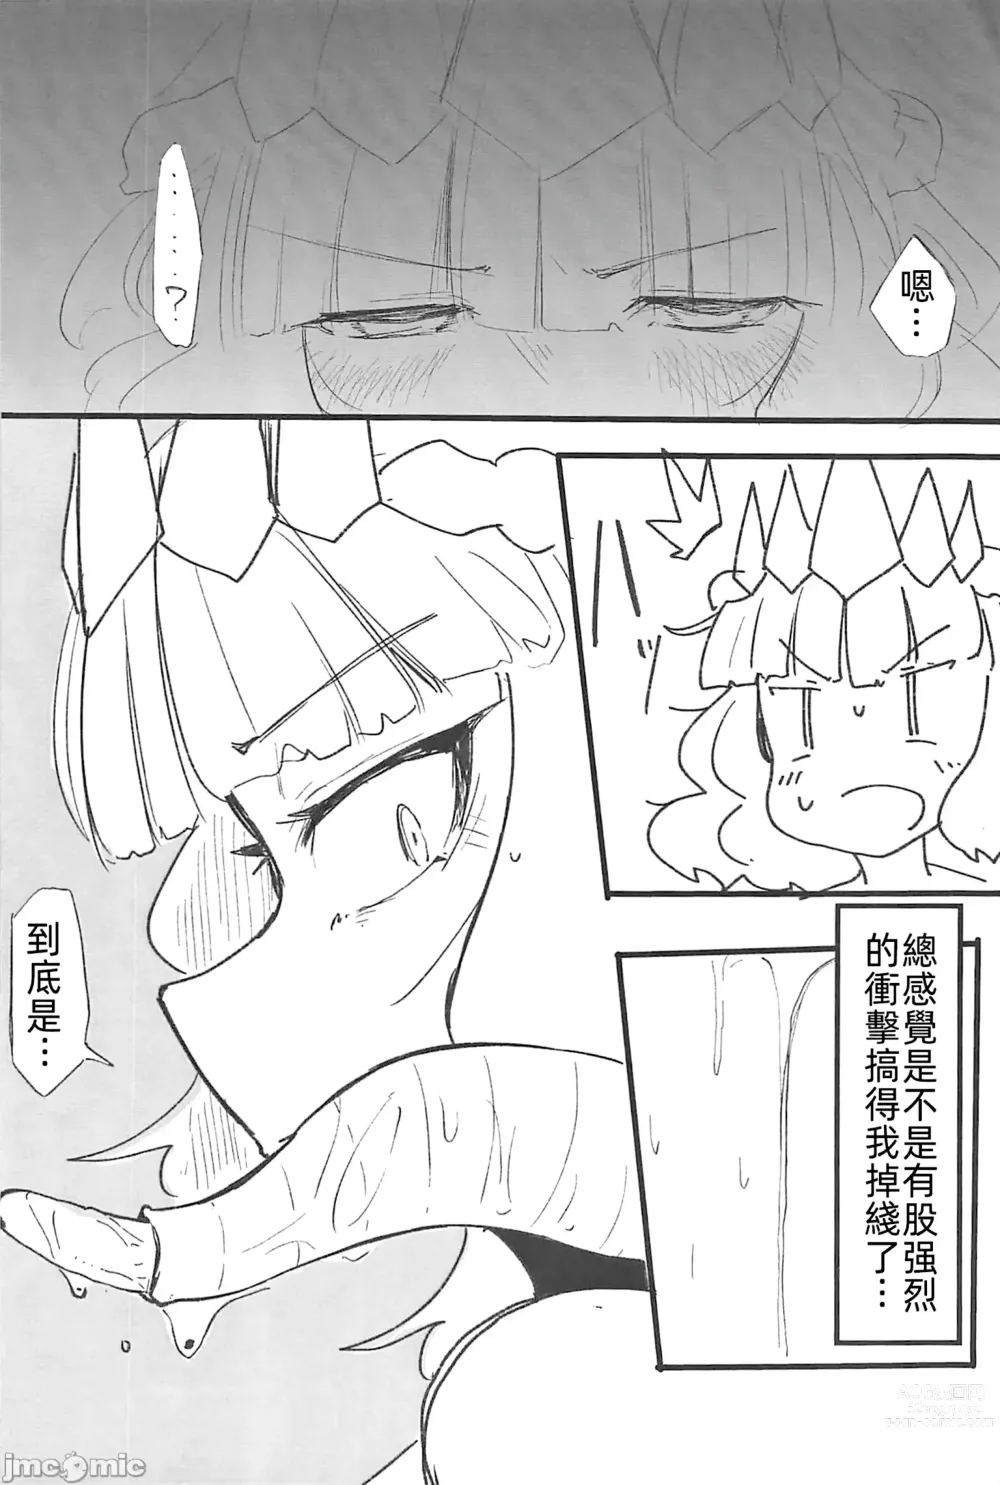 Page 21 of manga crosmcx12.13